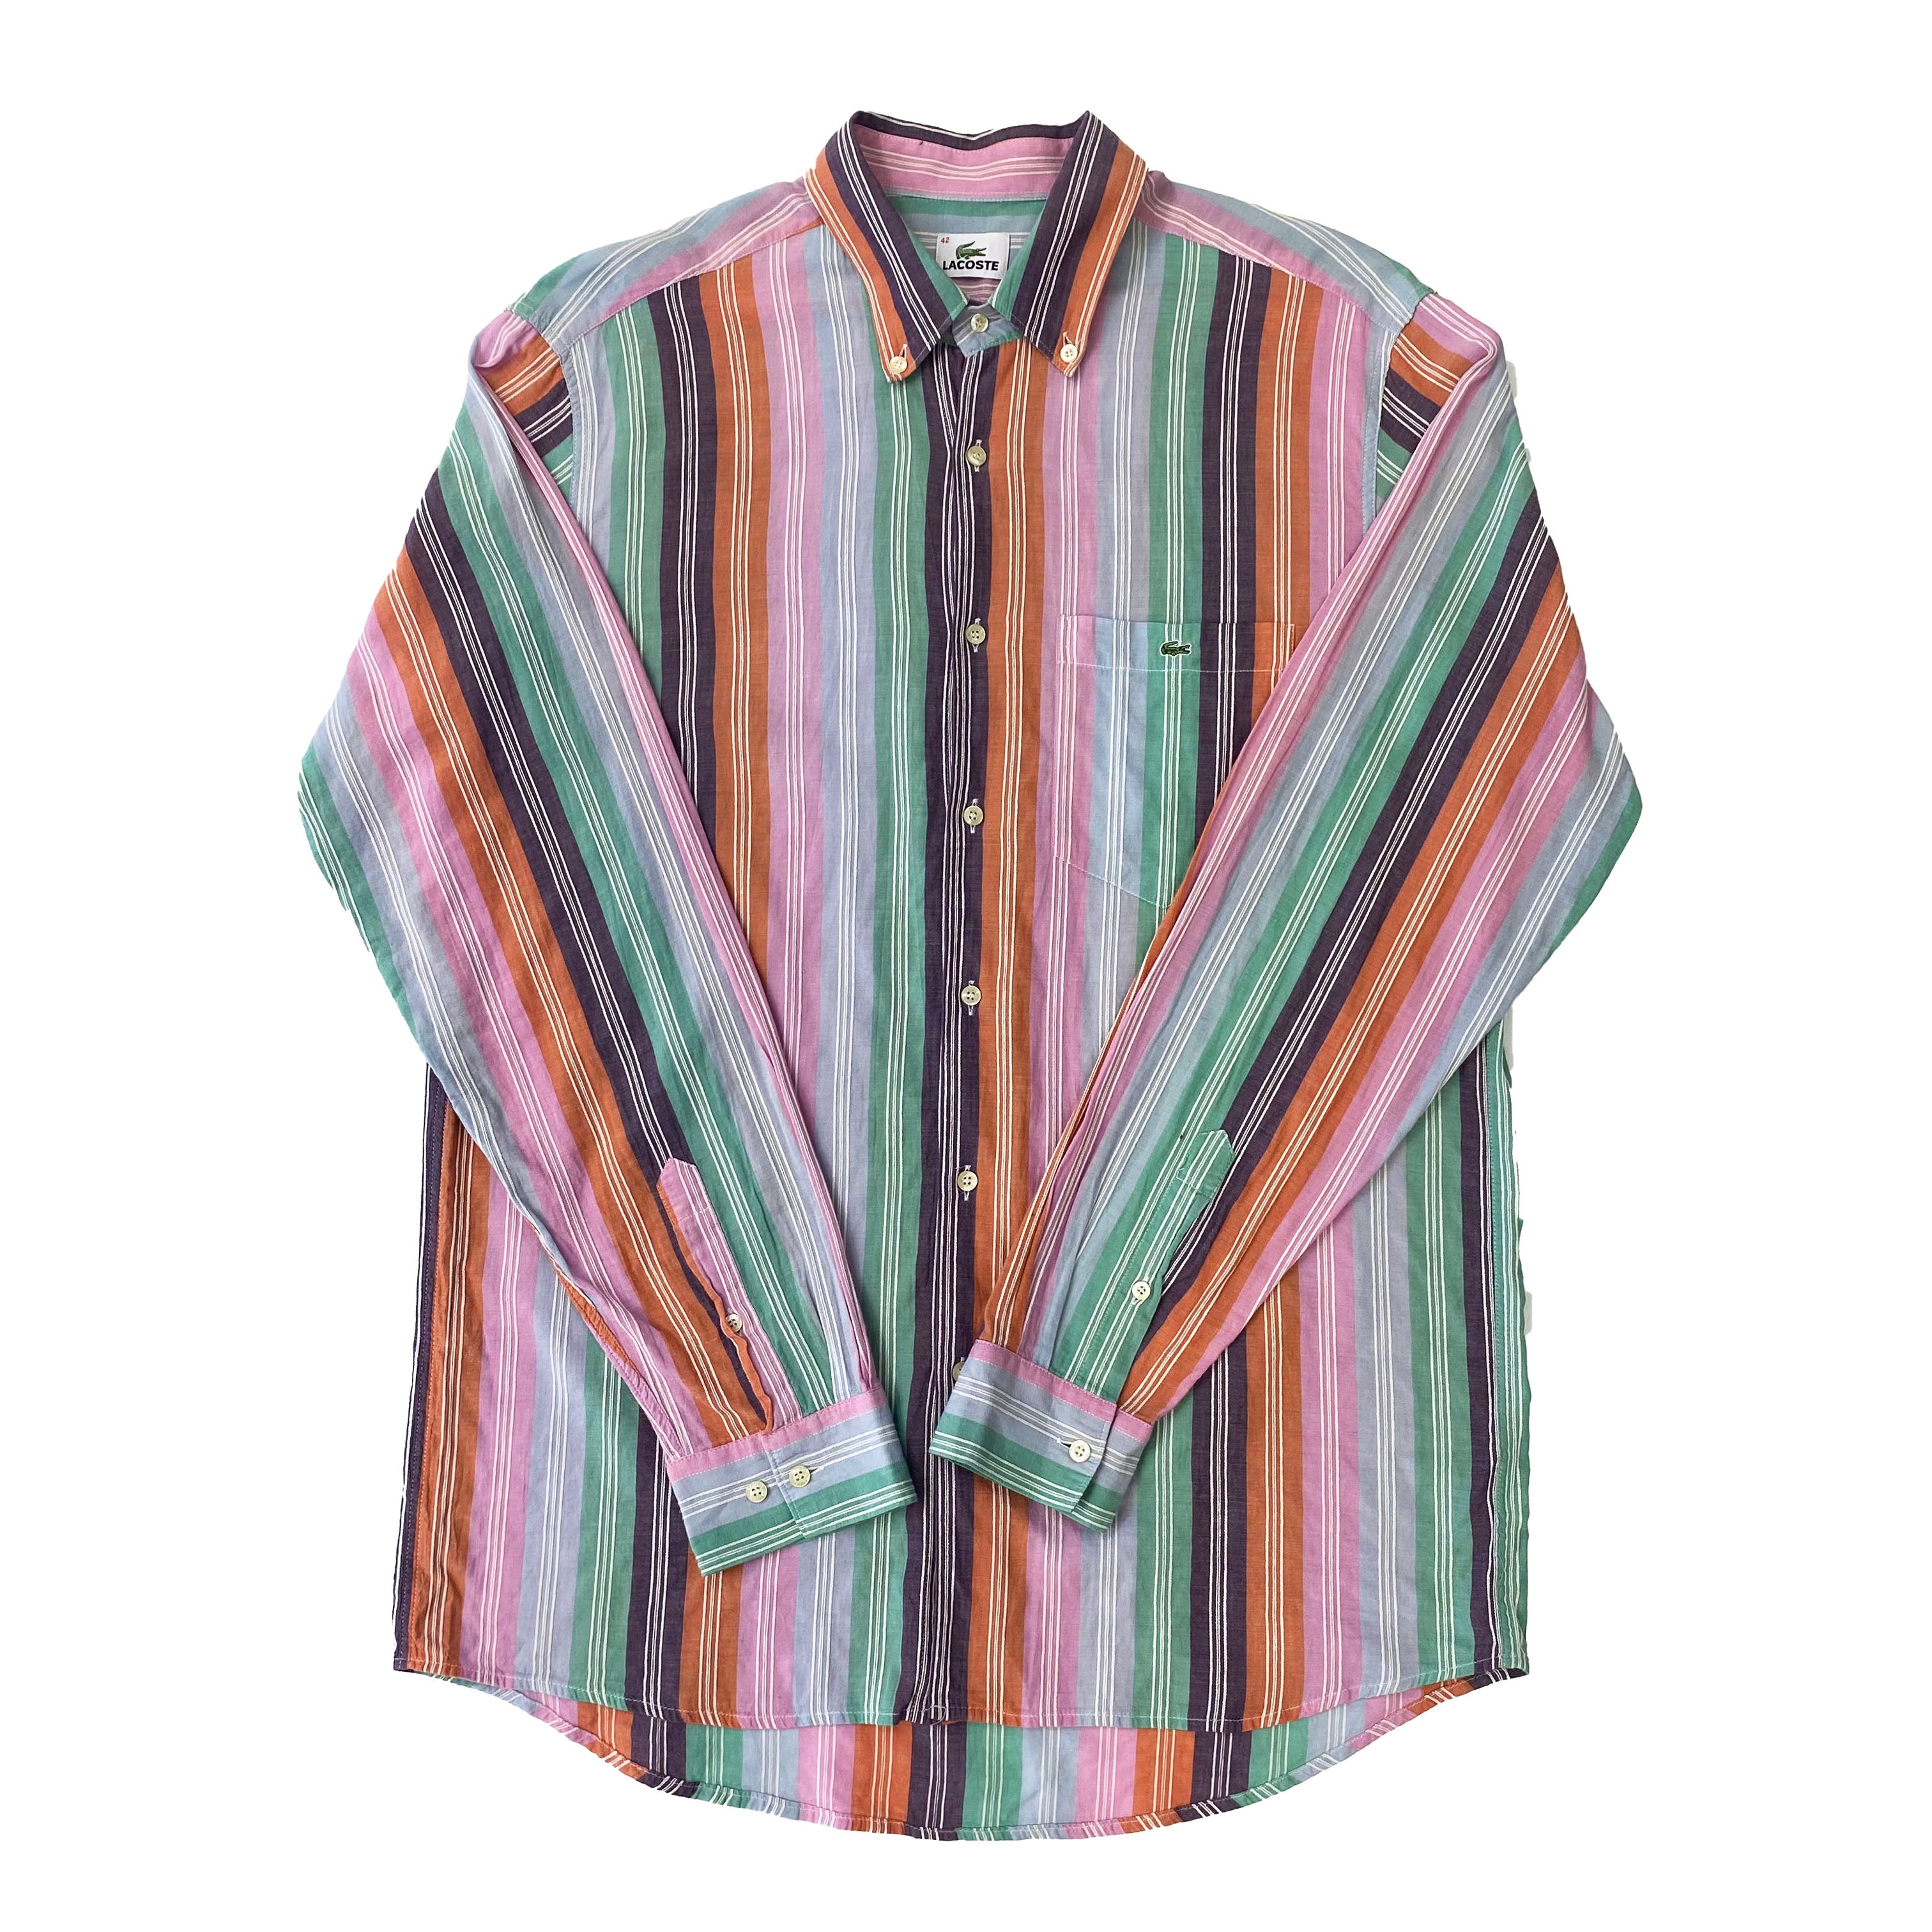 Lacoste Striped Button-down Shirt